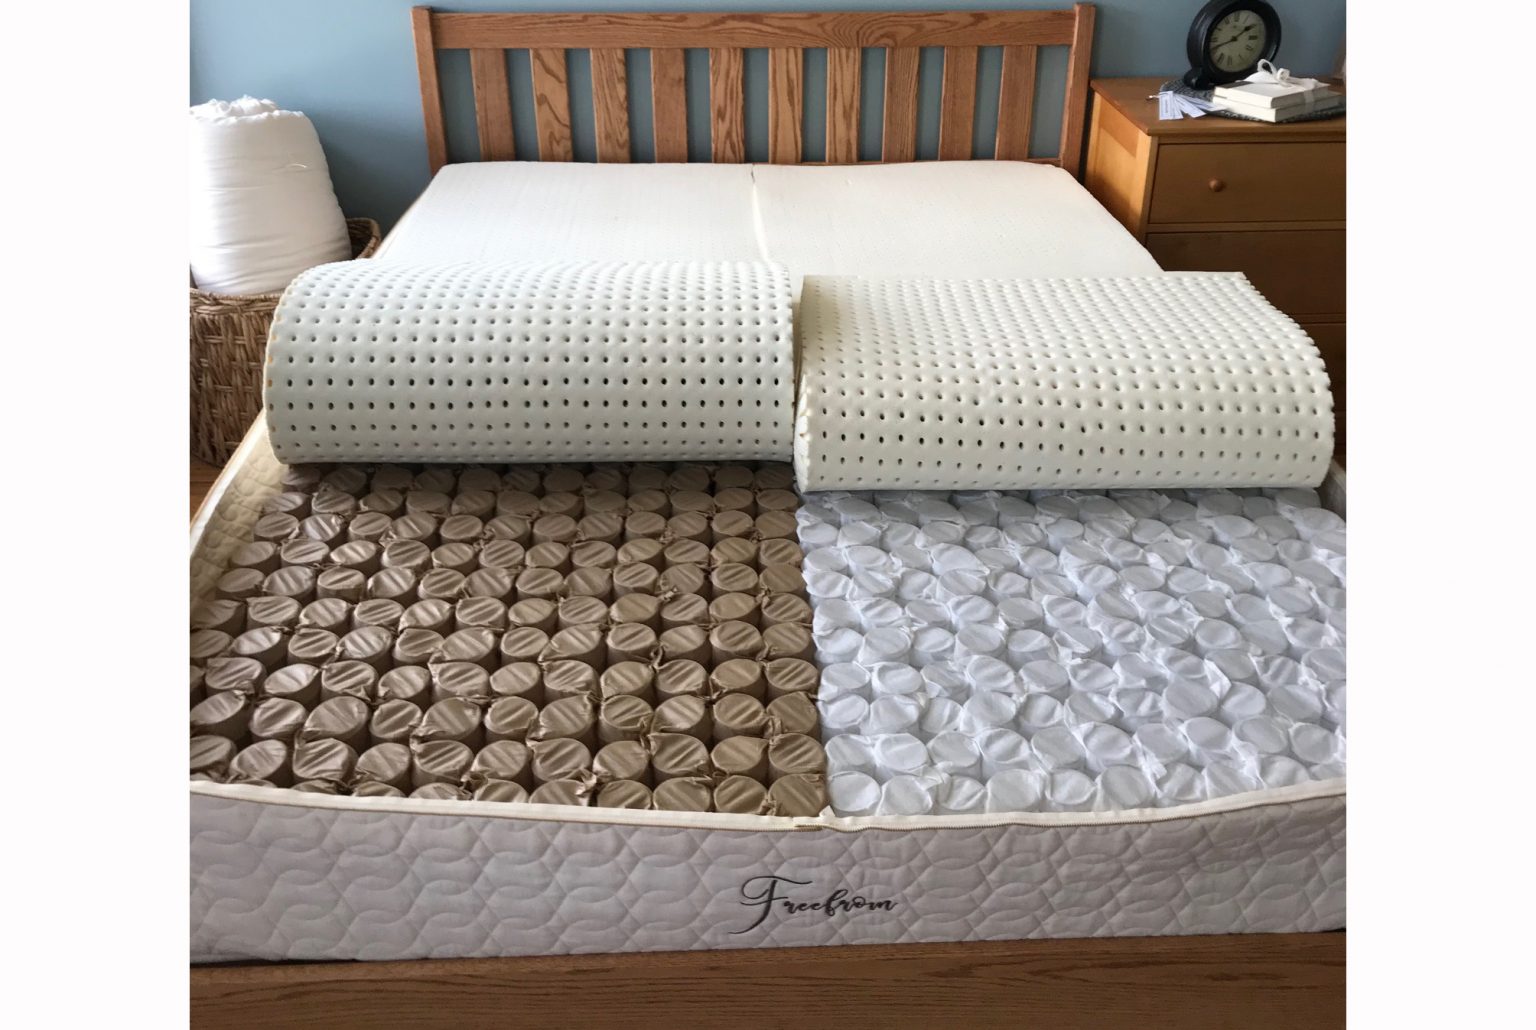 coil or foam mattress for toddler